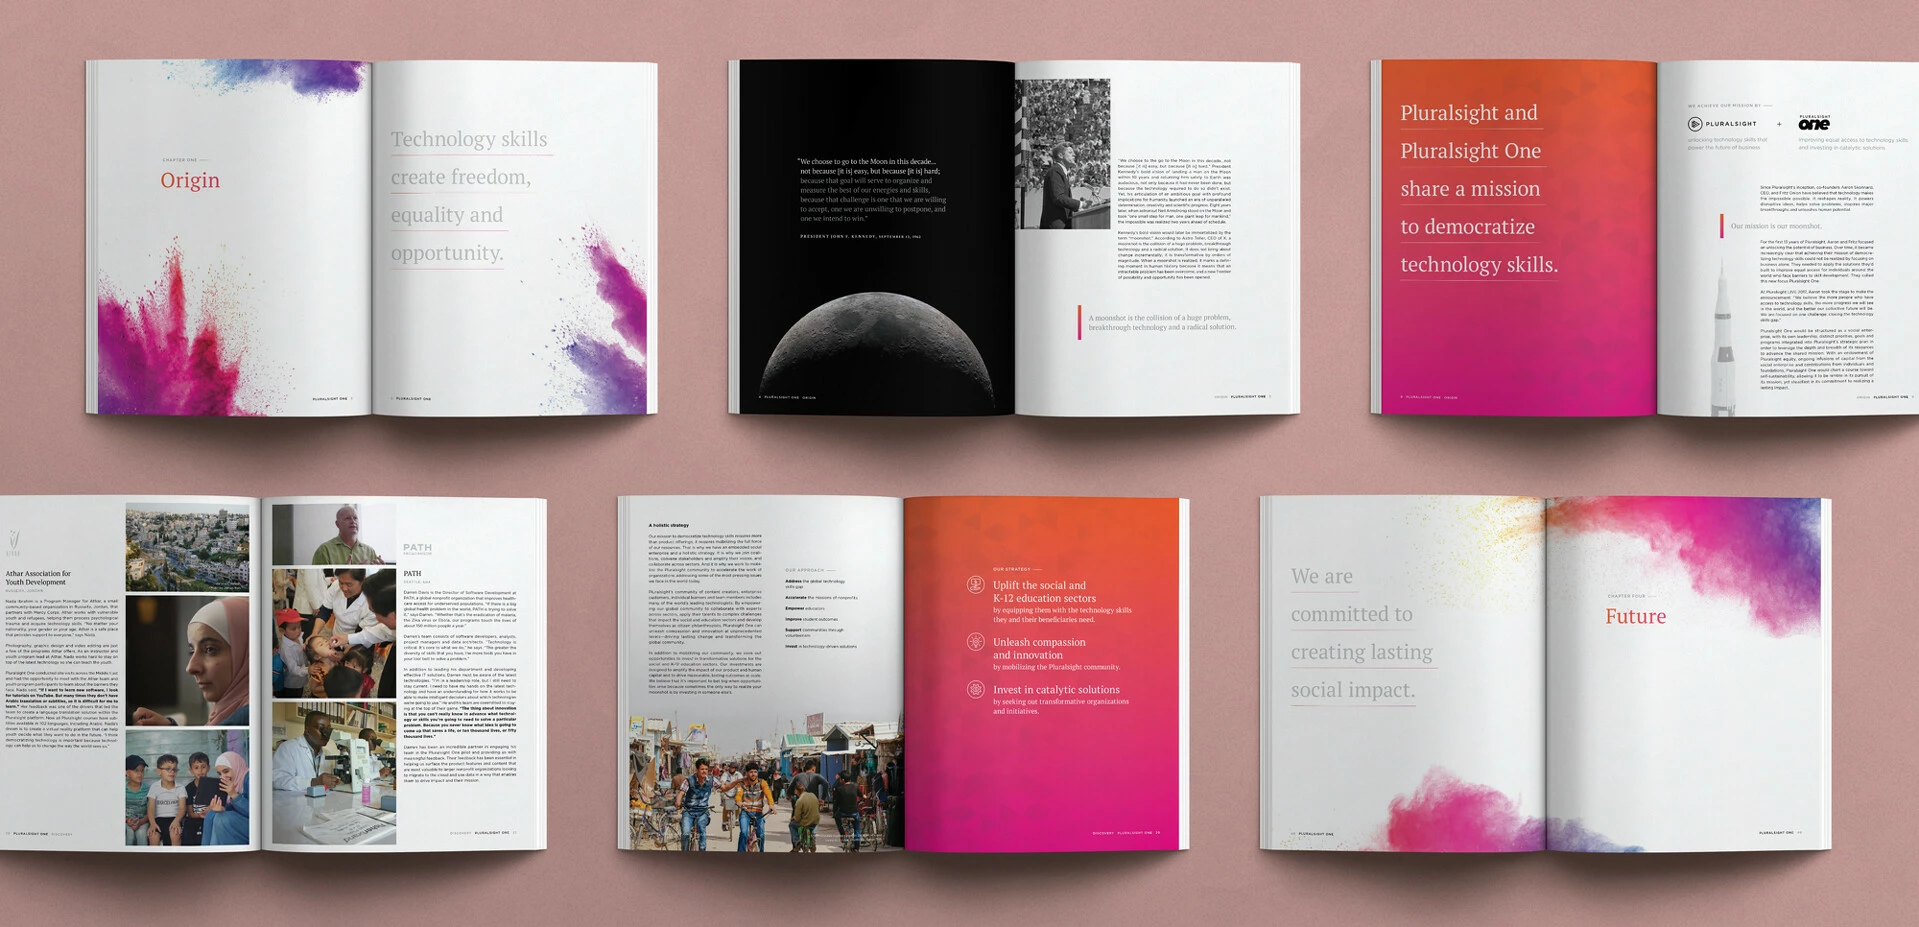 Pluralsight One 2018 Annual Report Print Design